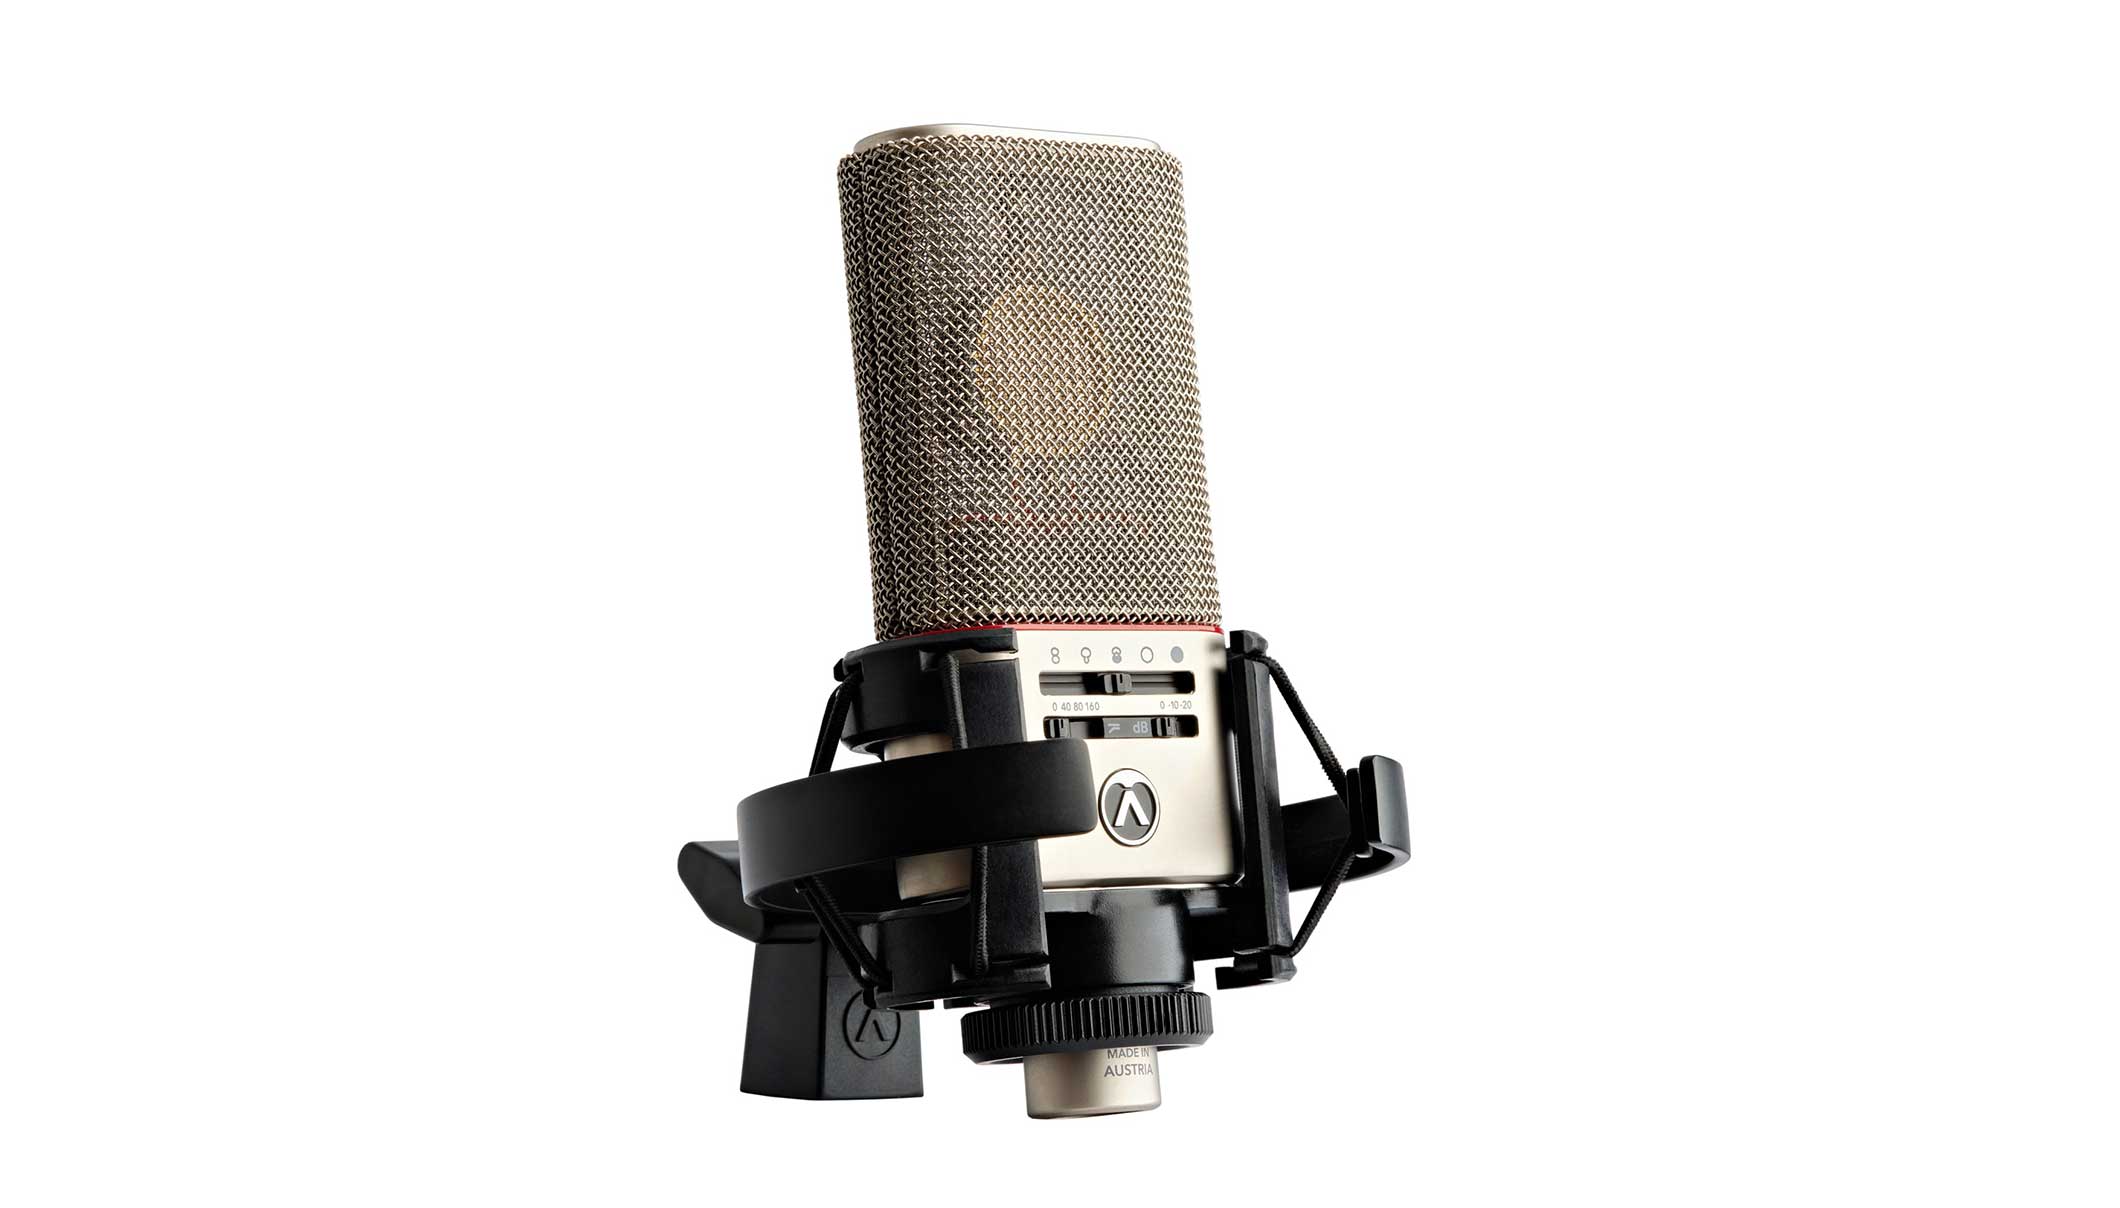 Austrian Audio OC818 Live Set по цене 249 990.00 ₽